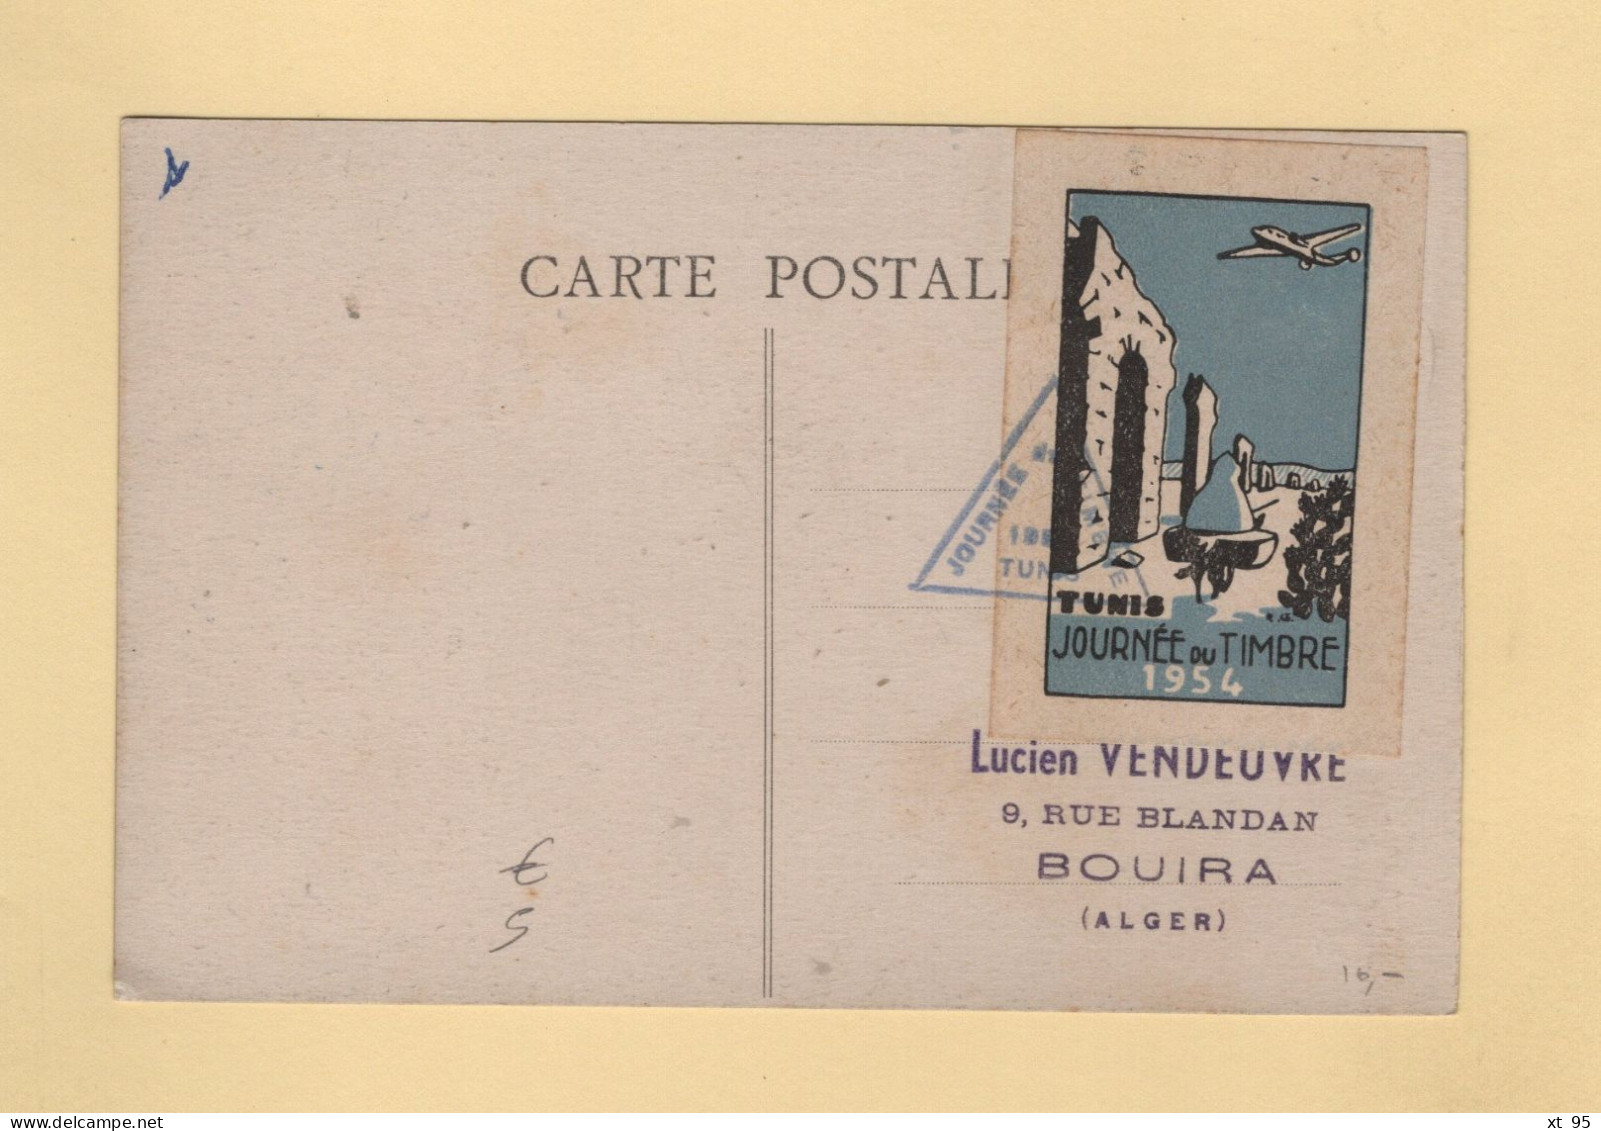 Tunisie - Journee Du Timbre - 1954 - Vignette Au Dos - Briefe U. Dokumente